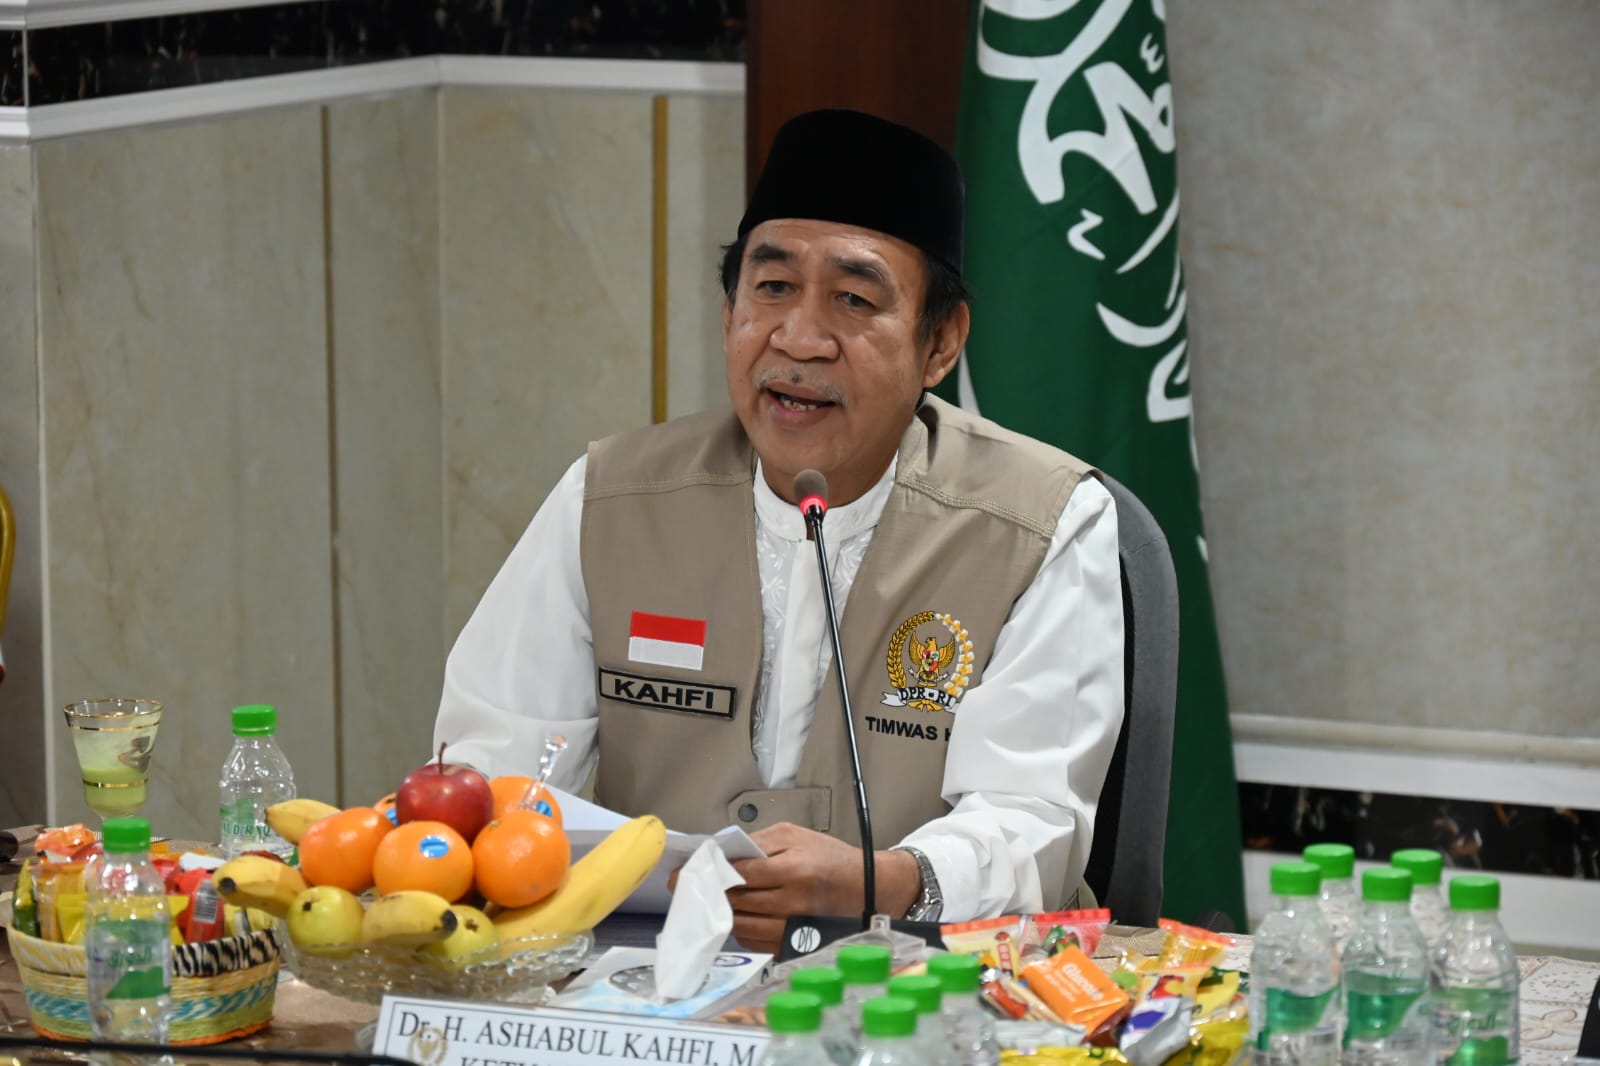 DPR RI: Masyarik Harus Minta  Maaf kepada Jemaah Haji Indonesia